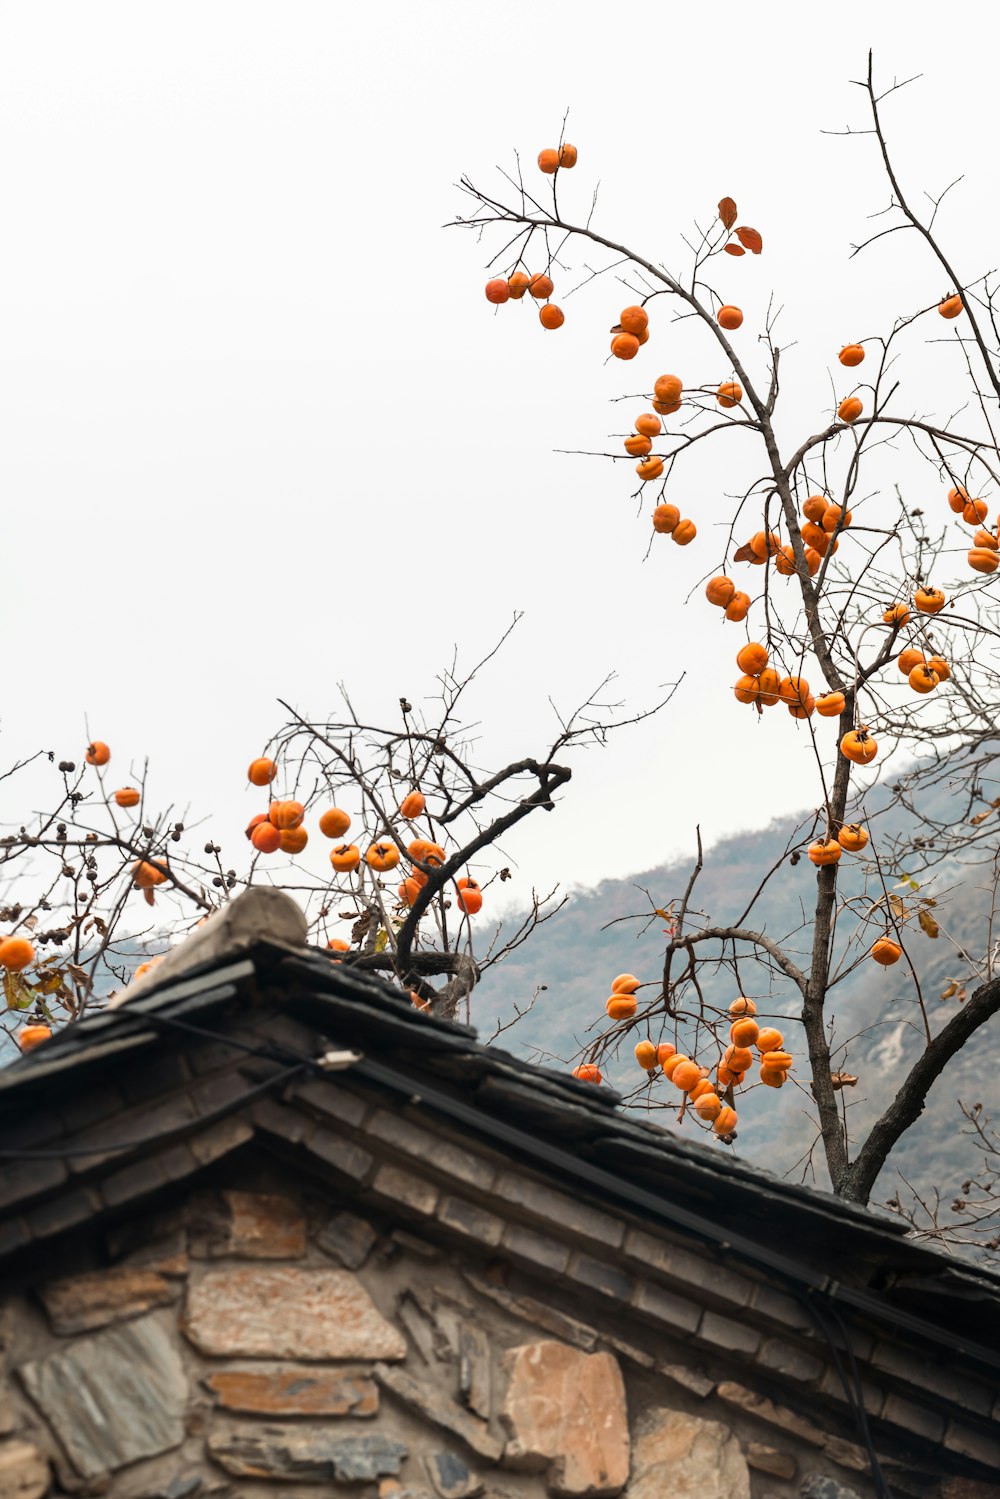 a tree with orange berries